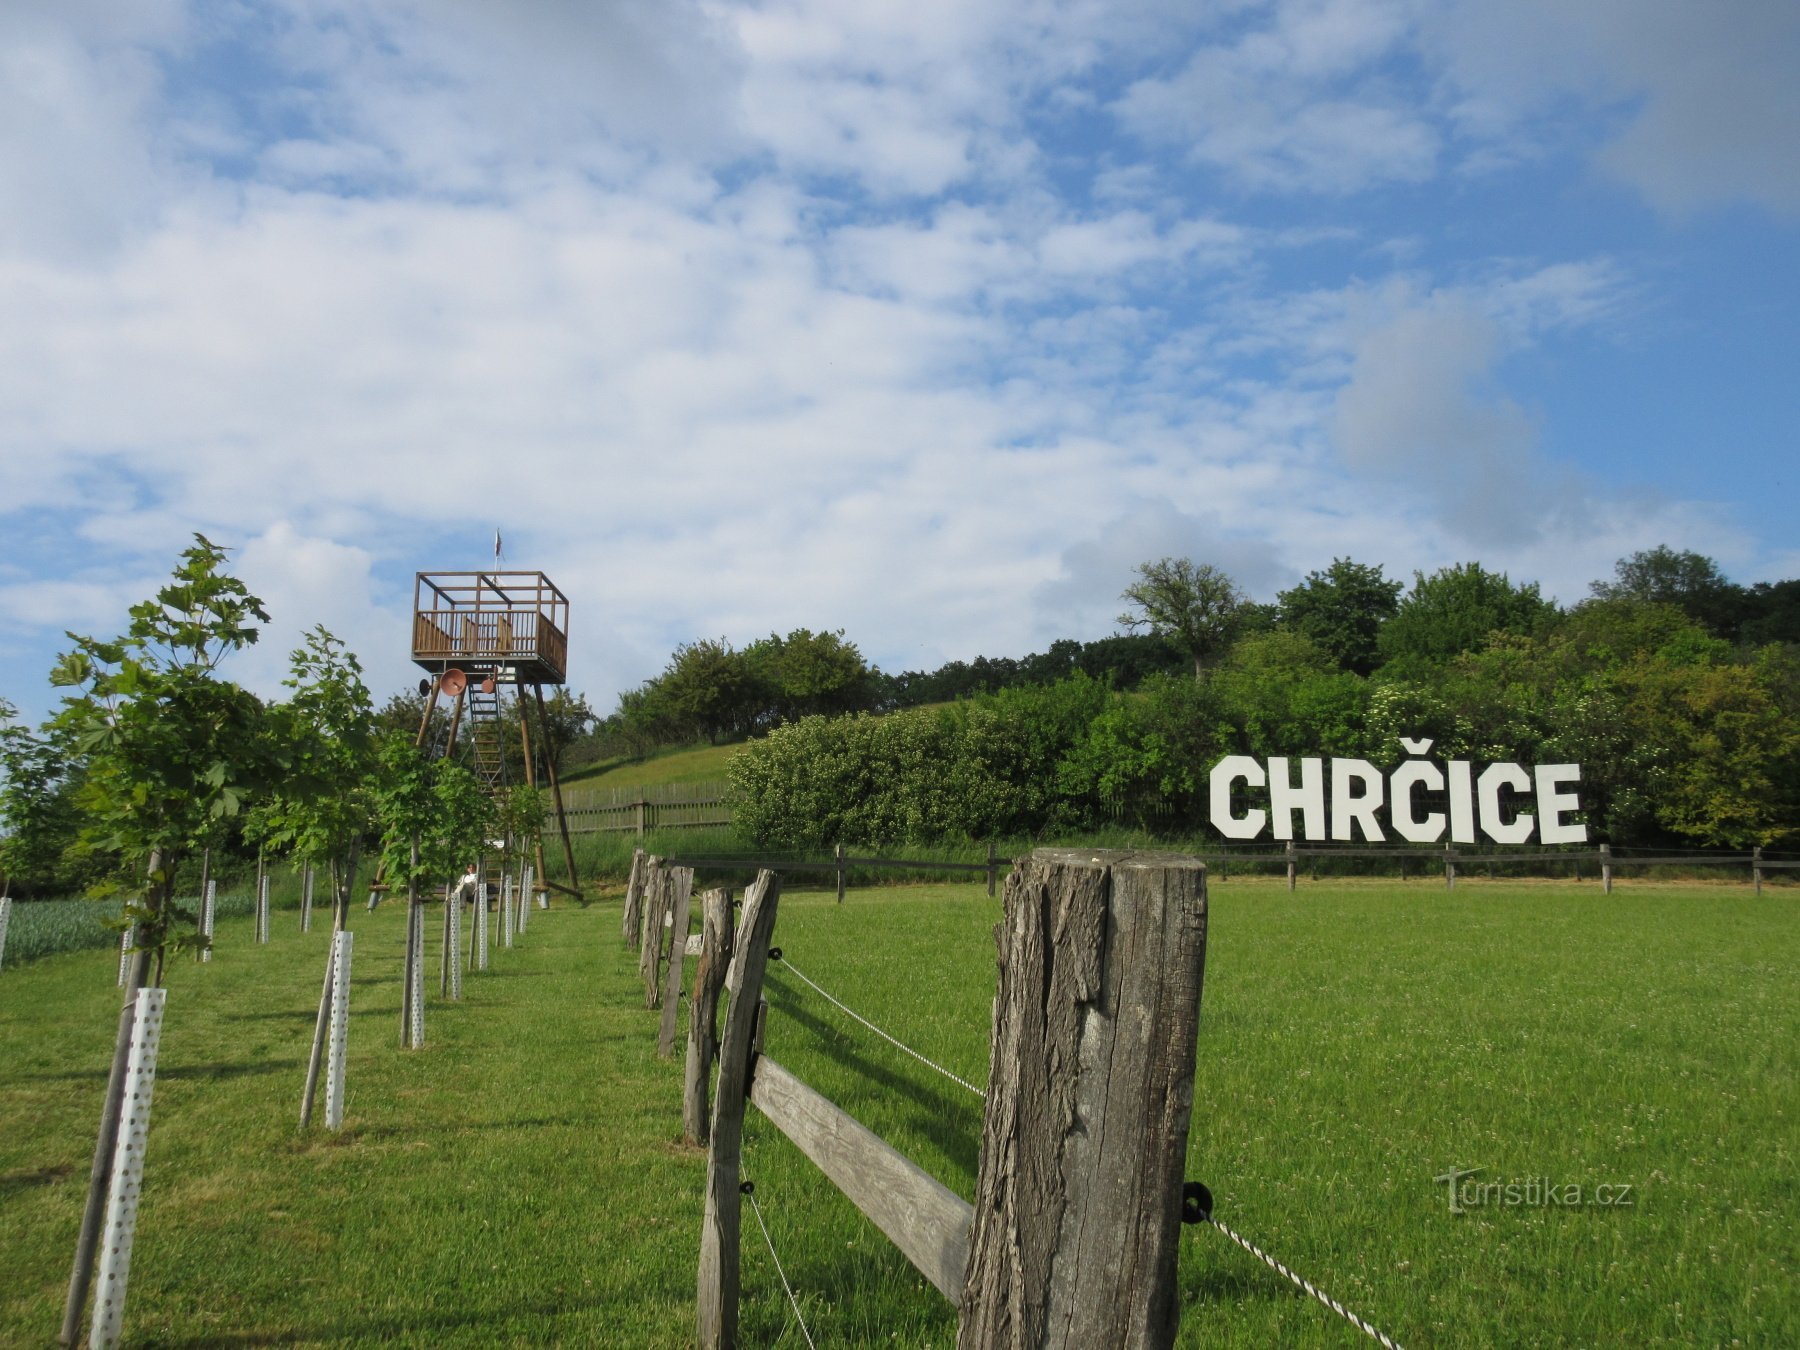 Polní Chrčice – village and wooden lookout tower